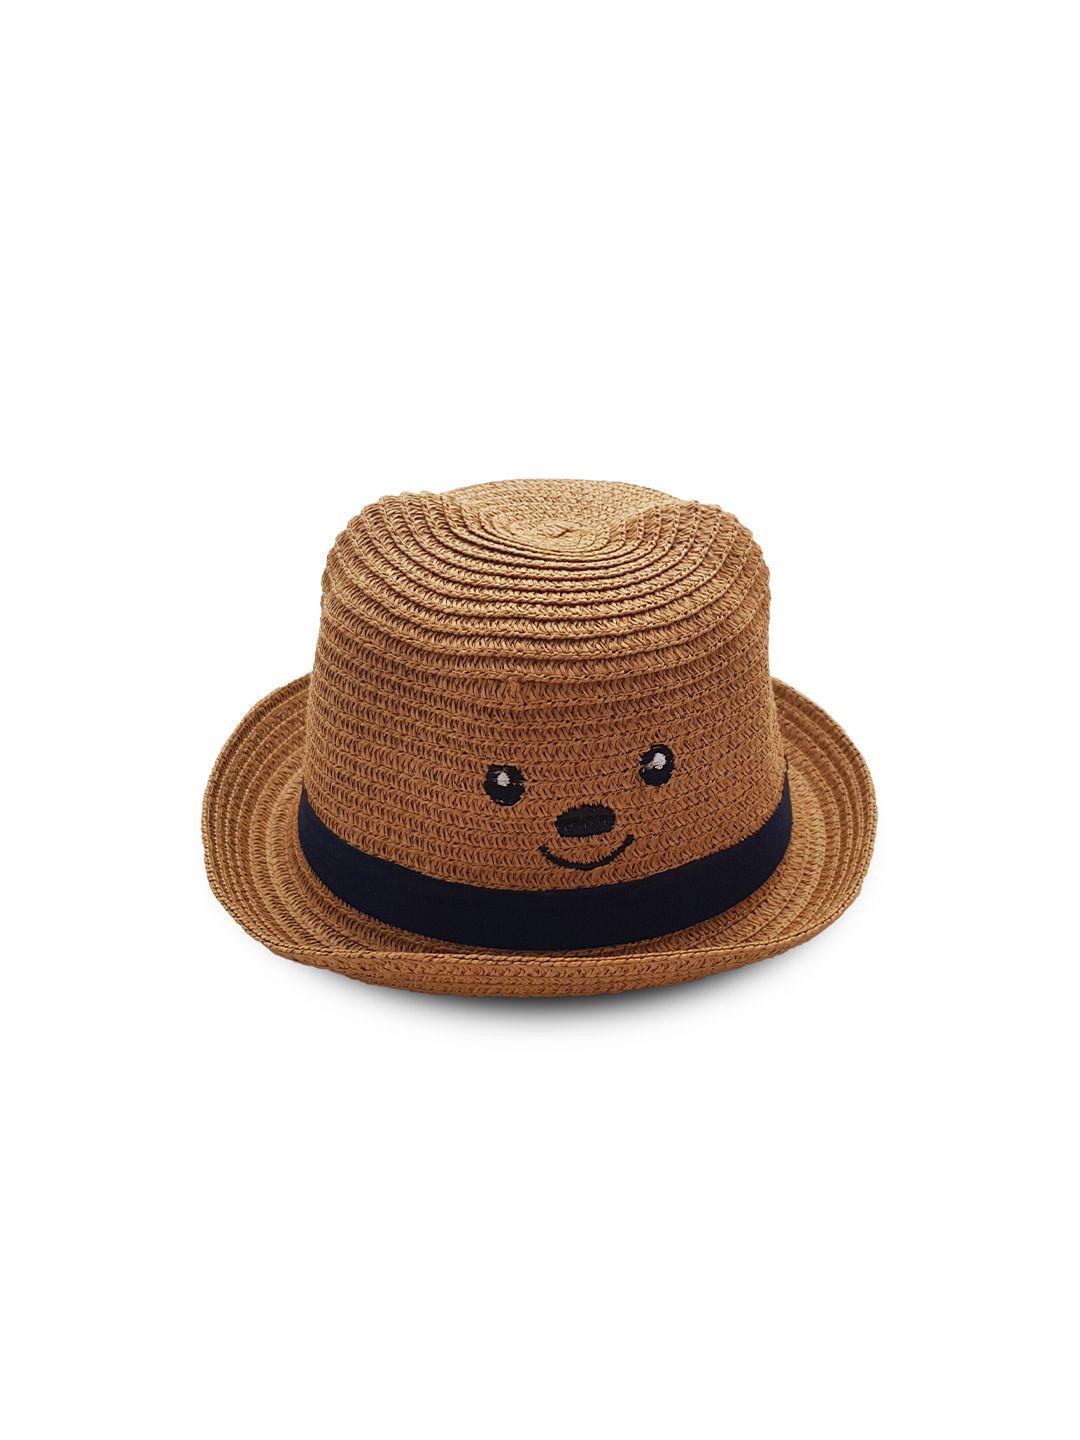 jenna kids embroidered sun hat